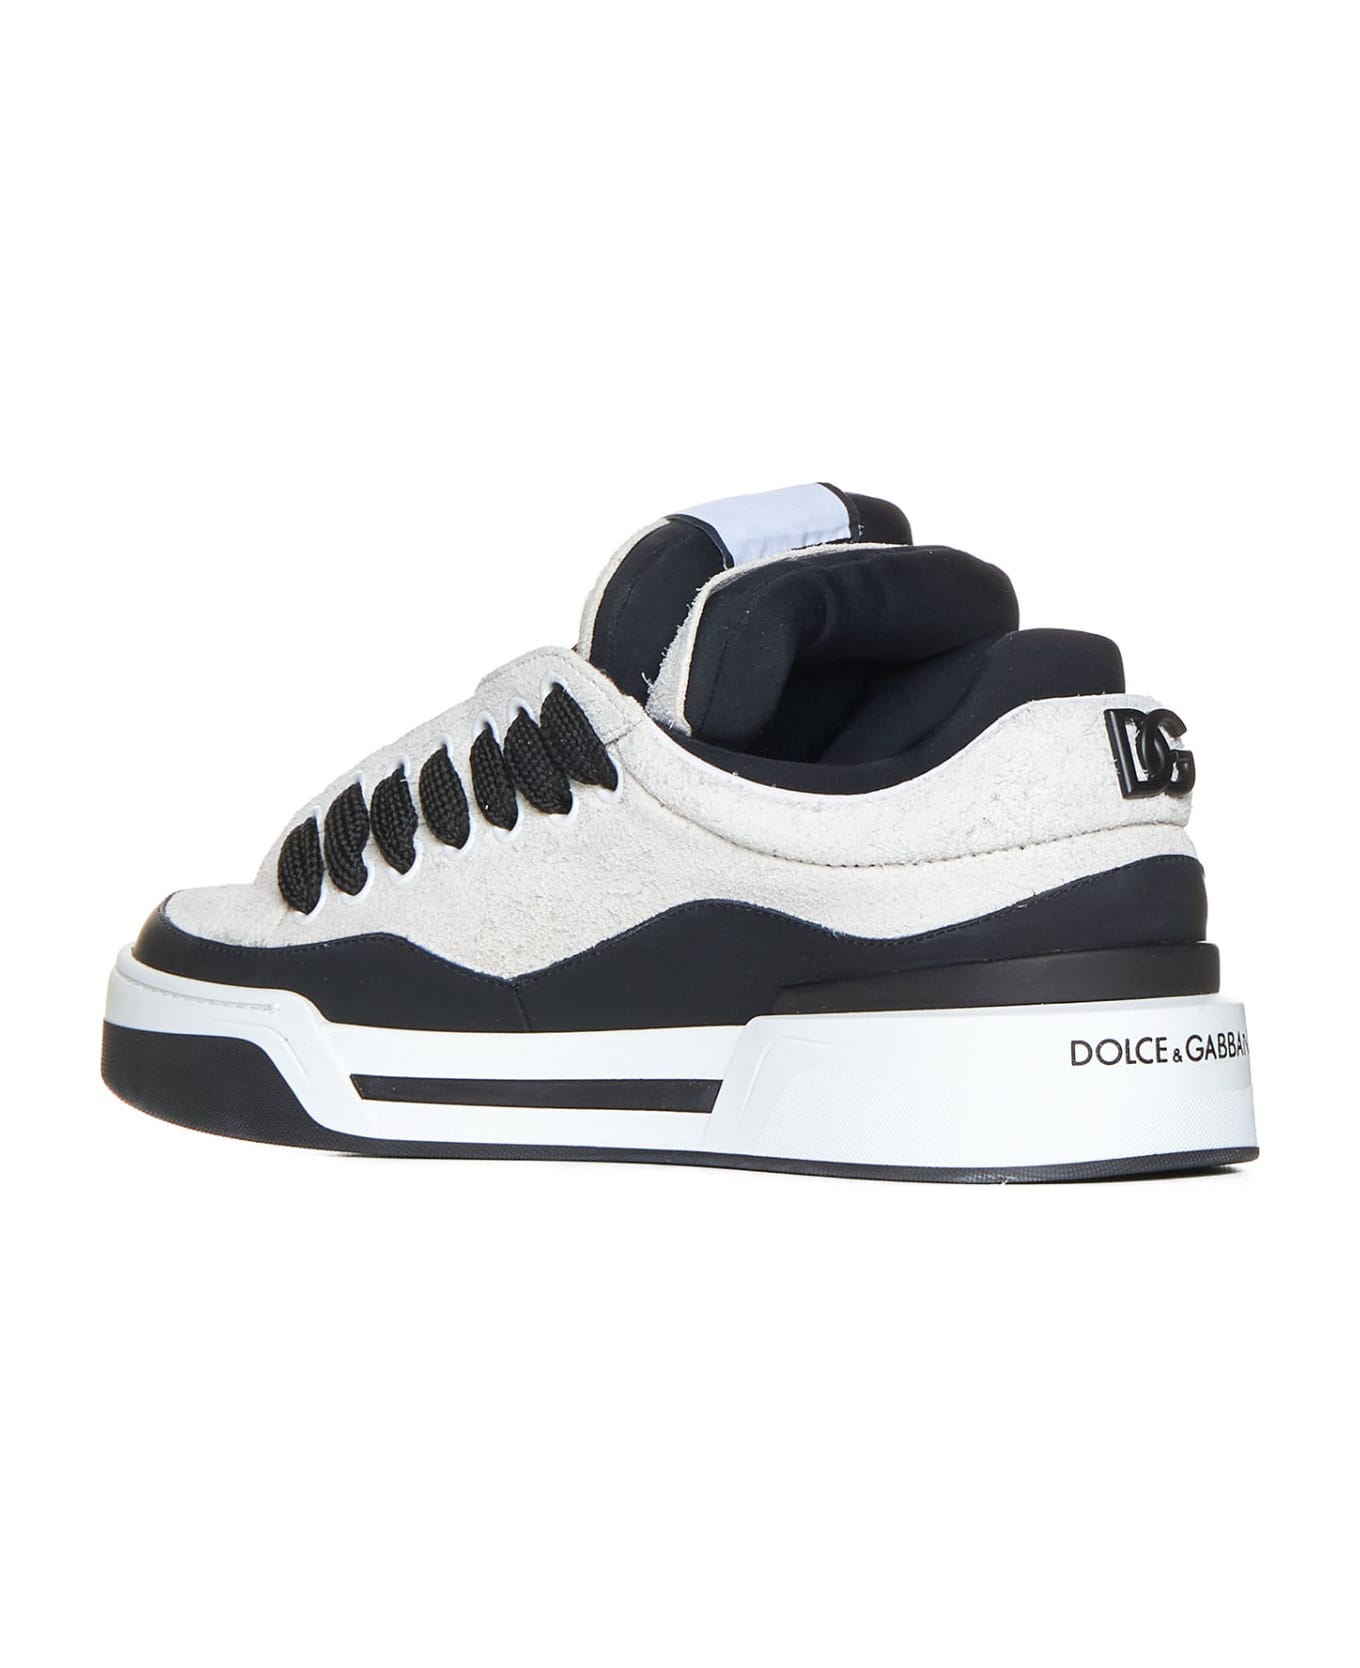 Dolce & Gabbana New Roma Sneakers - Bianco nero